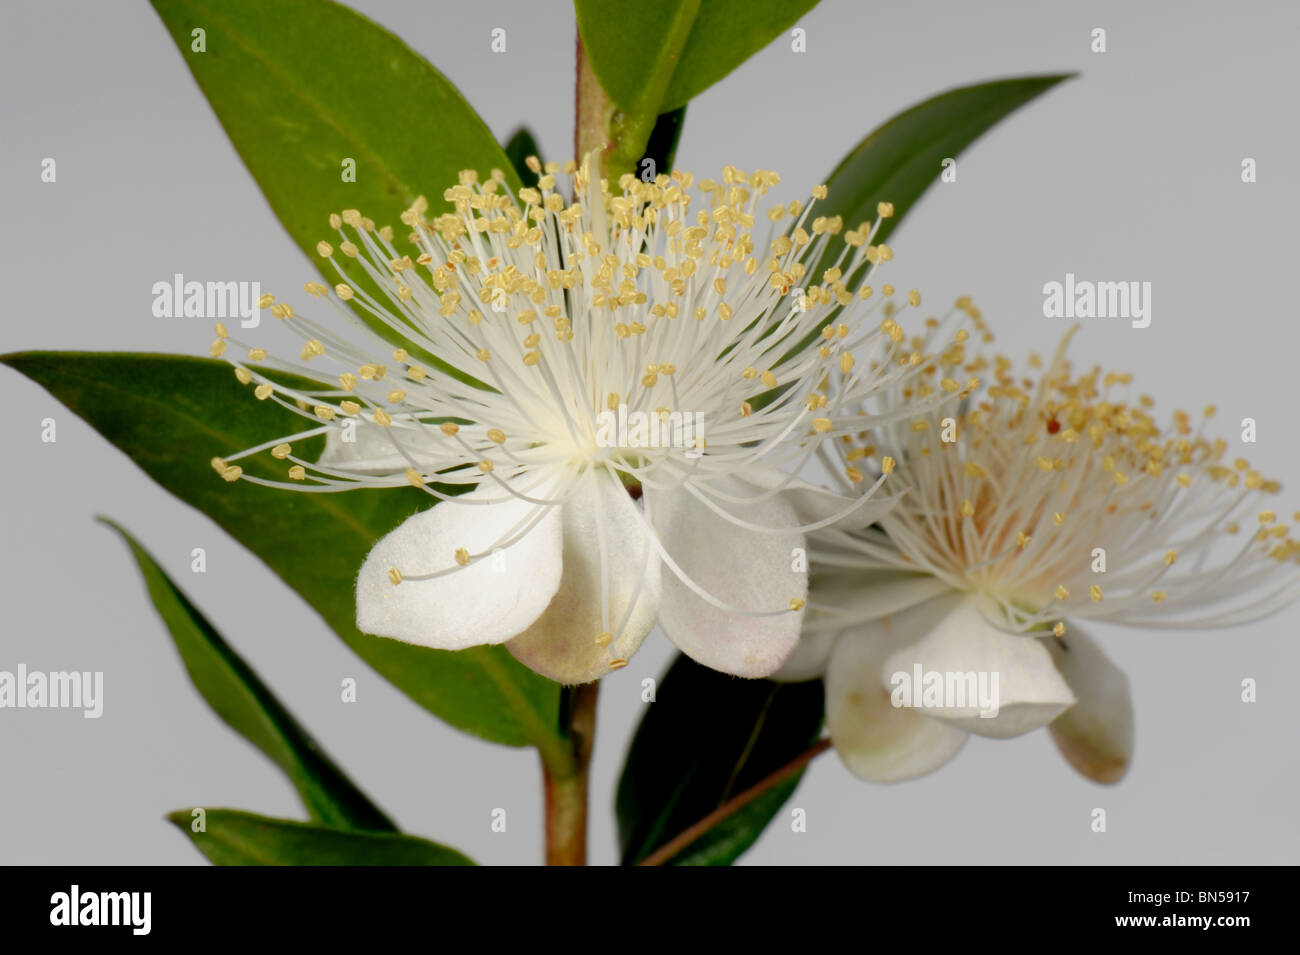 Myrtle (Myrtus communis) shrub flower and bold filaments against a white background Stock Photo